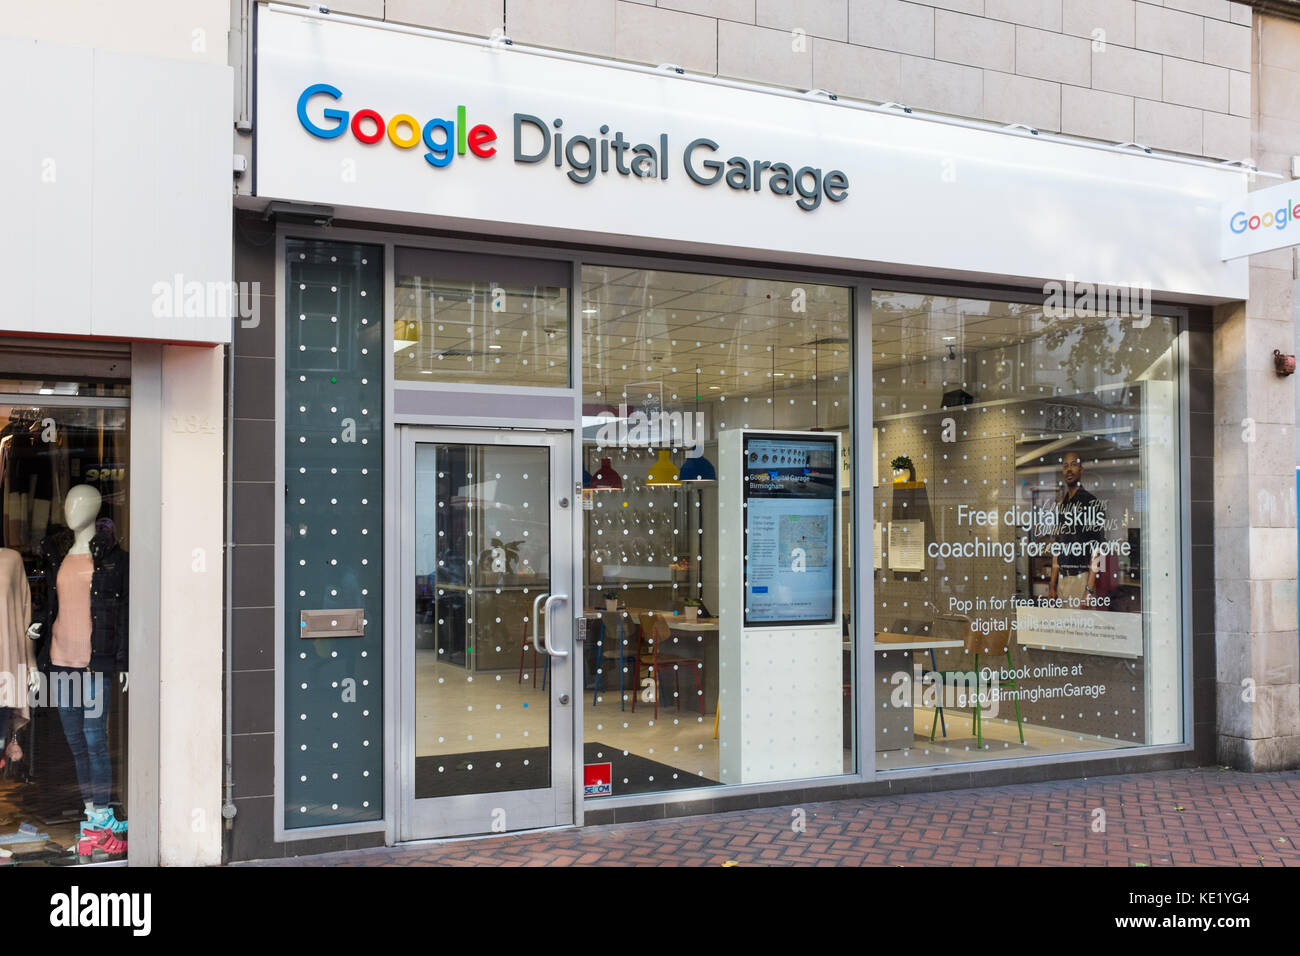 Google Digital Garage shop front in New Street, Birmingham, UK Stock Photo  - Alamy